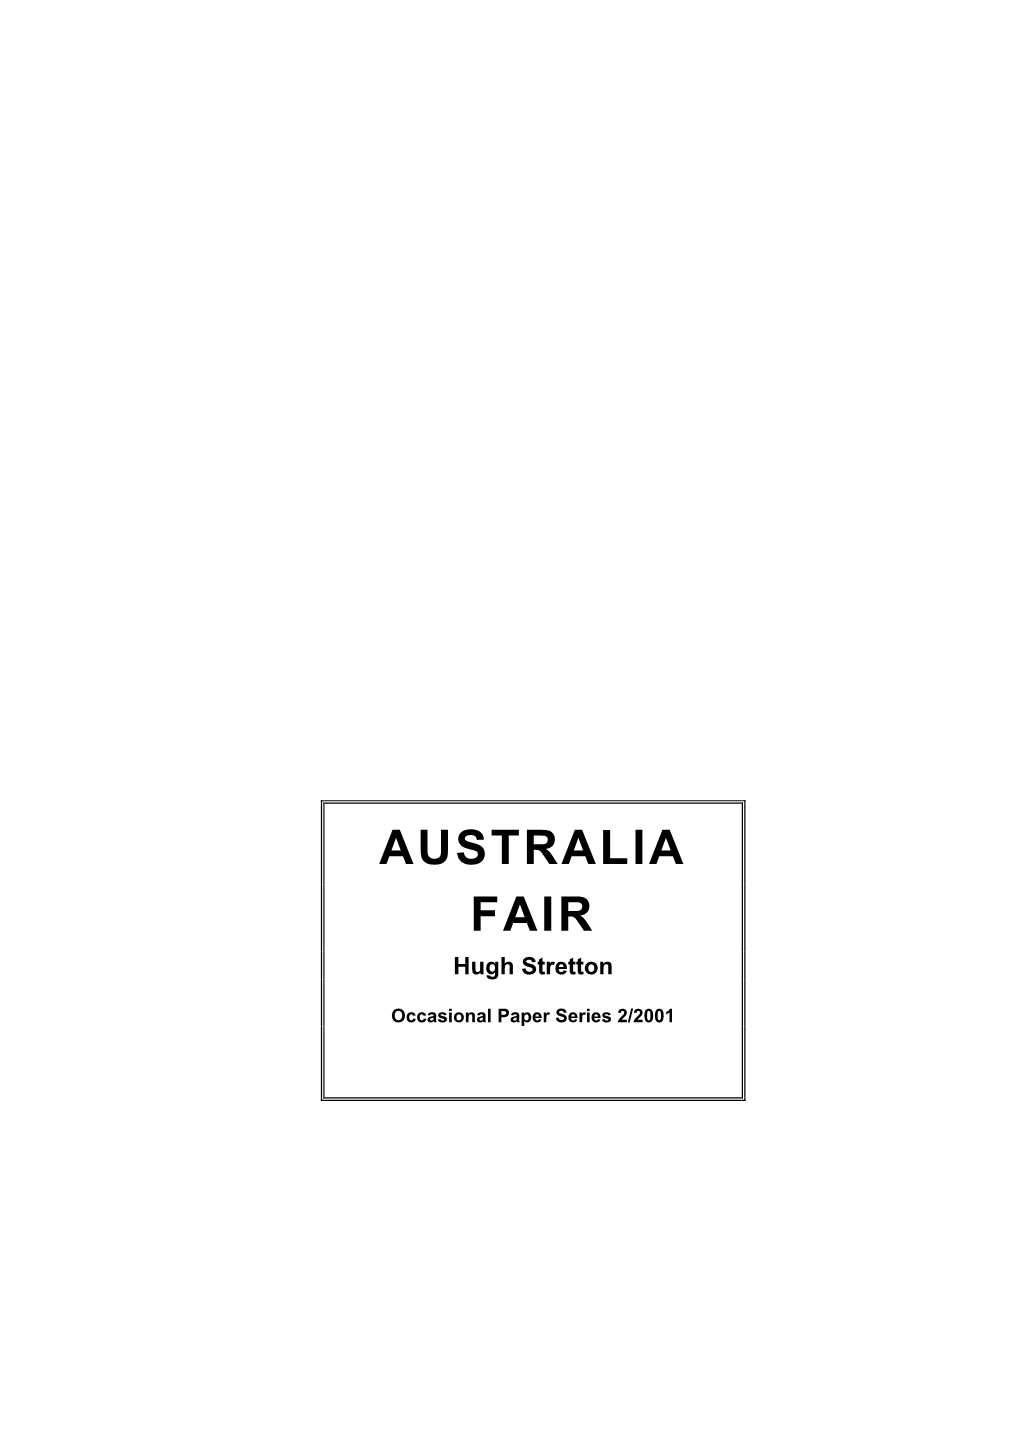 Ocassional Paper Series 2/2001: 'Australia Fair' (Hugh Stretton)